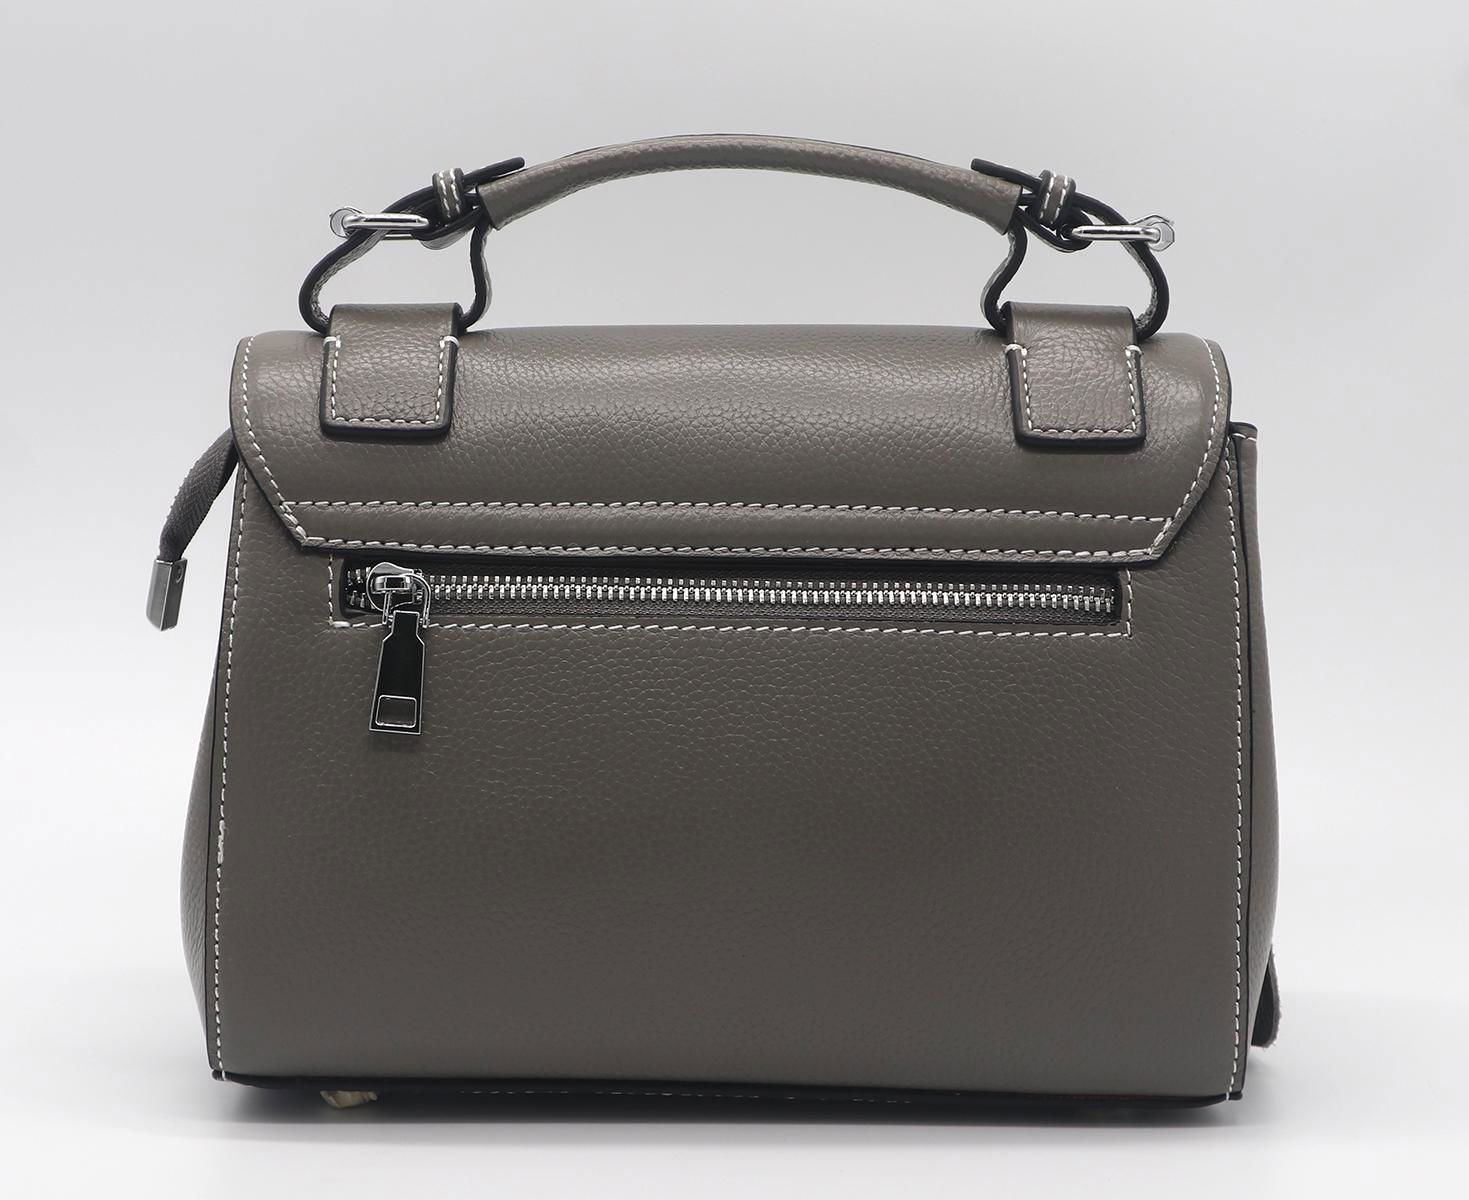 Hot! 2019 newest genuine leather trend women handbag grey colour  3